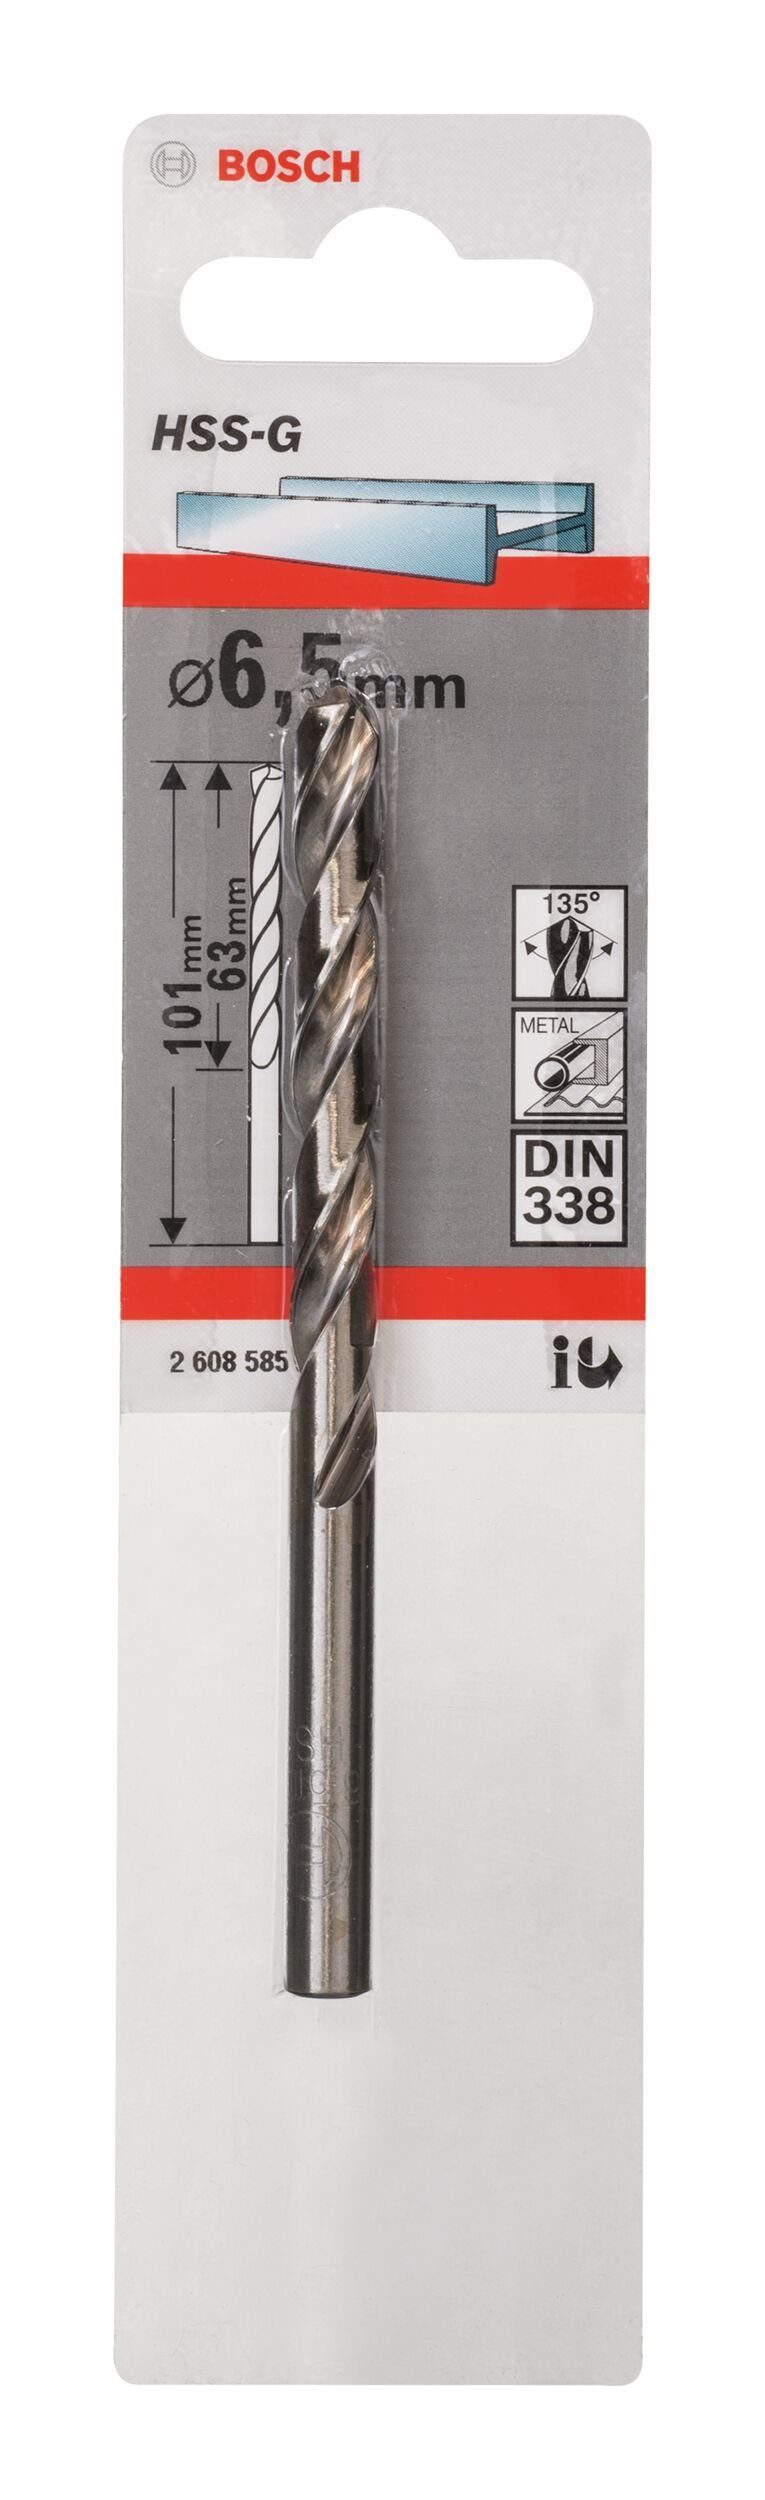 6,5 BOSCH - 101 1er-Pack 338) HSS-G (DIN - x mm Metallbohrer, 63 x